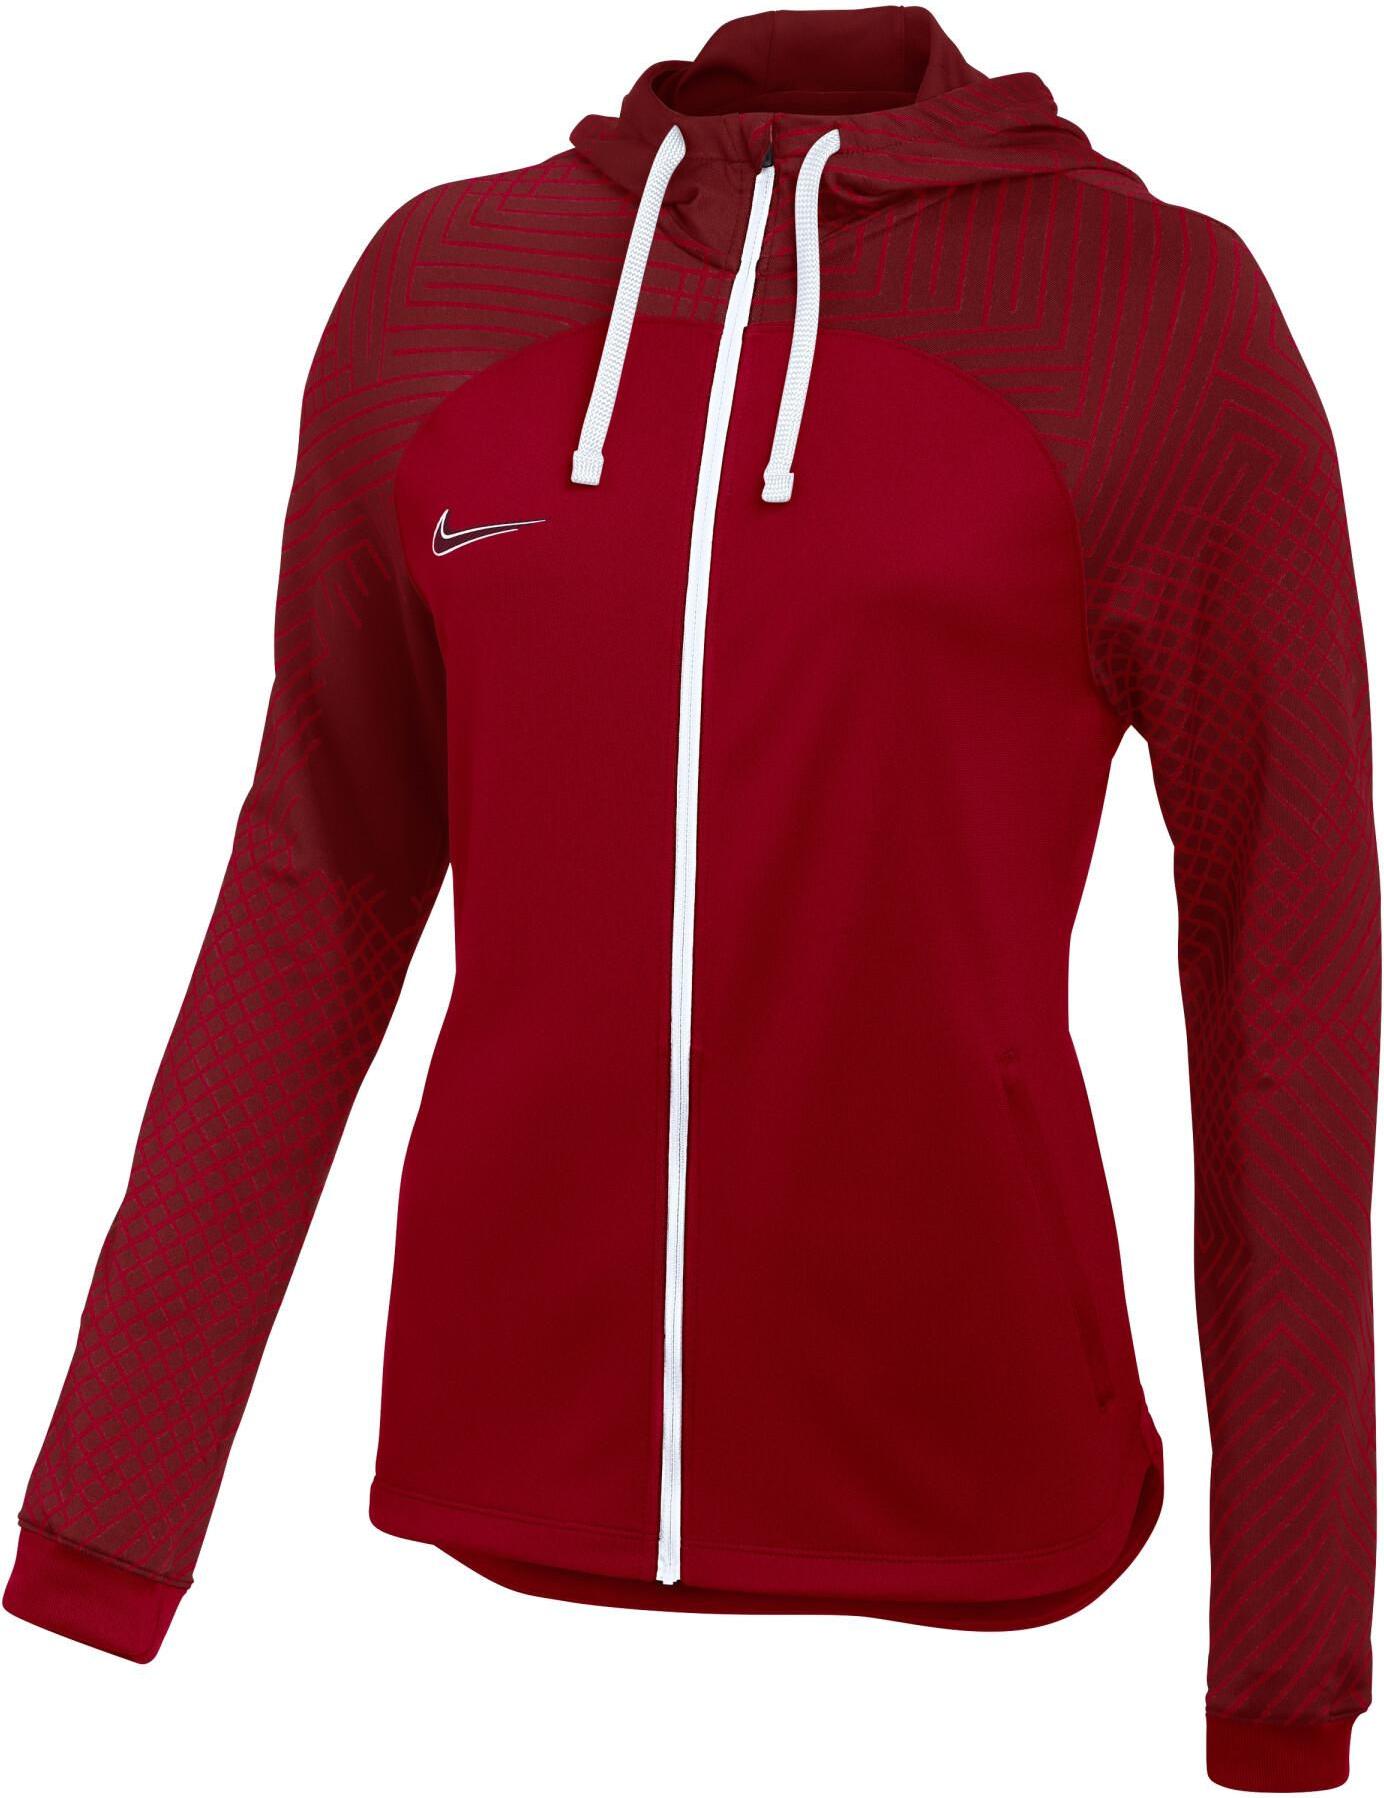 Nike Dri-Fit Jacket | Workout jacket, Nike dri fit, Innovative fashion